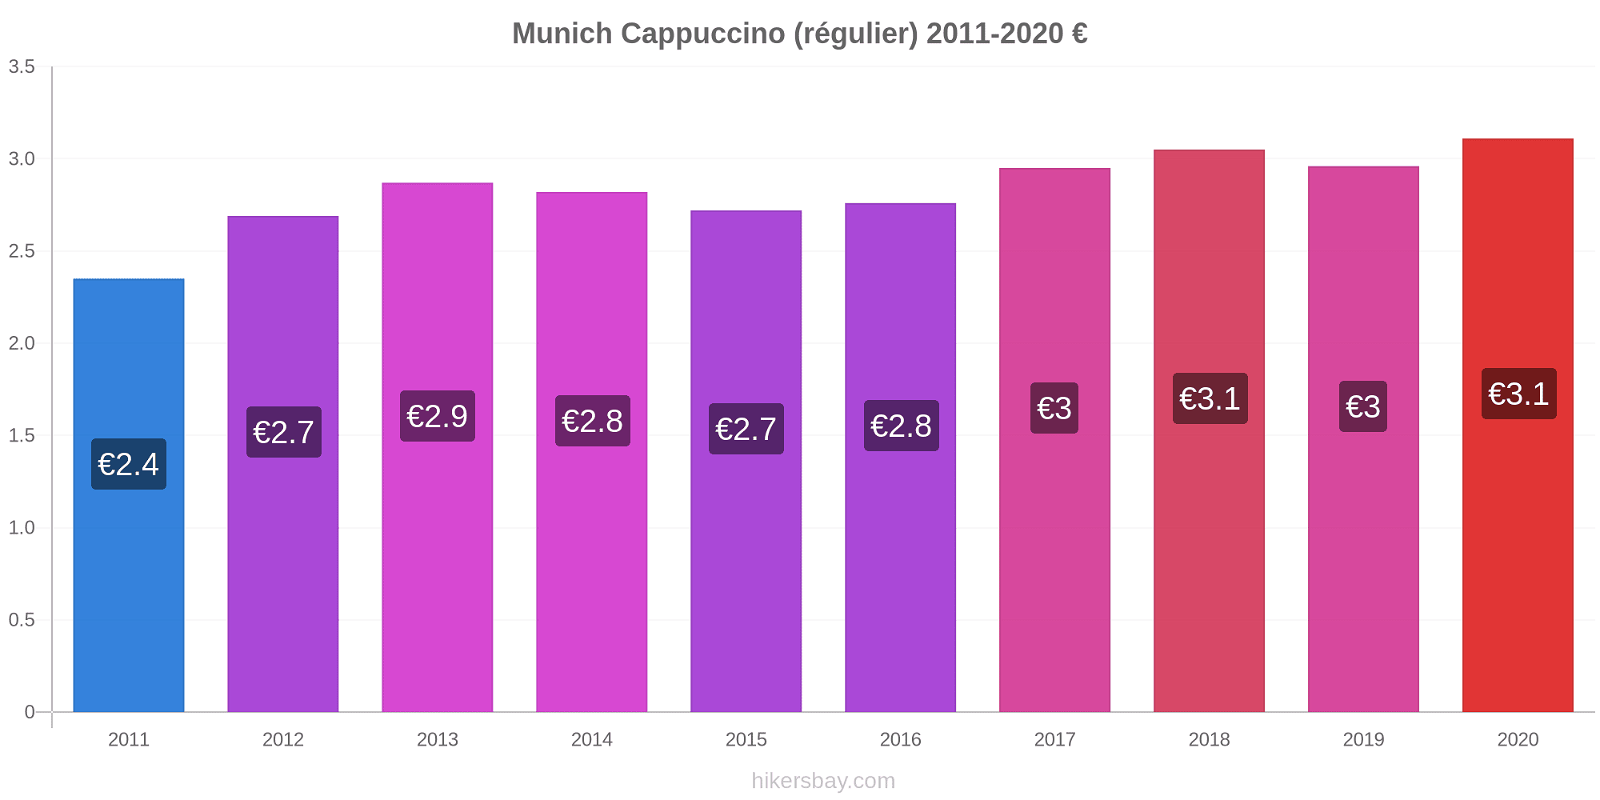 Munich changements de prix Cappuccino (régulier) hikersbay.com